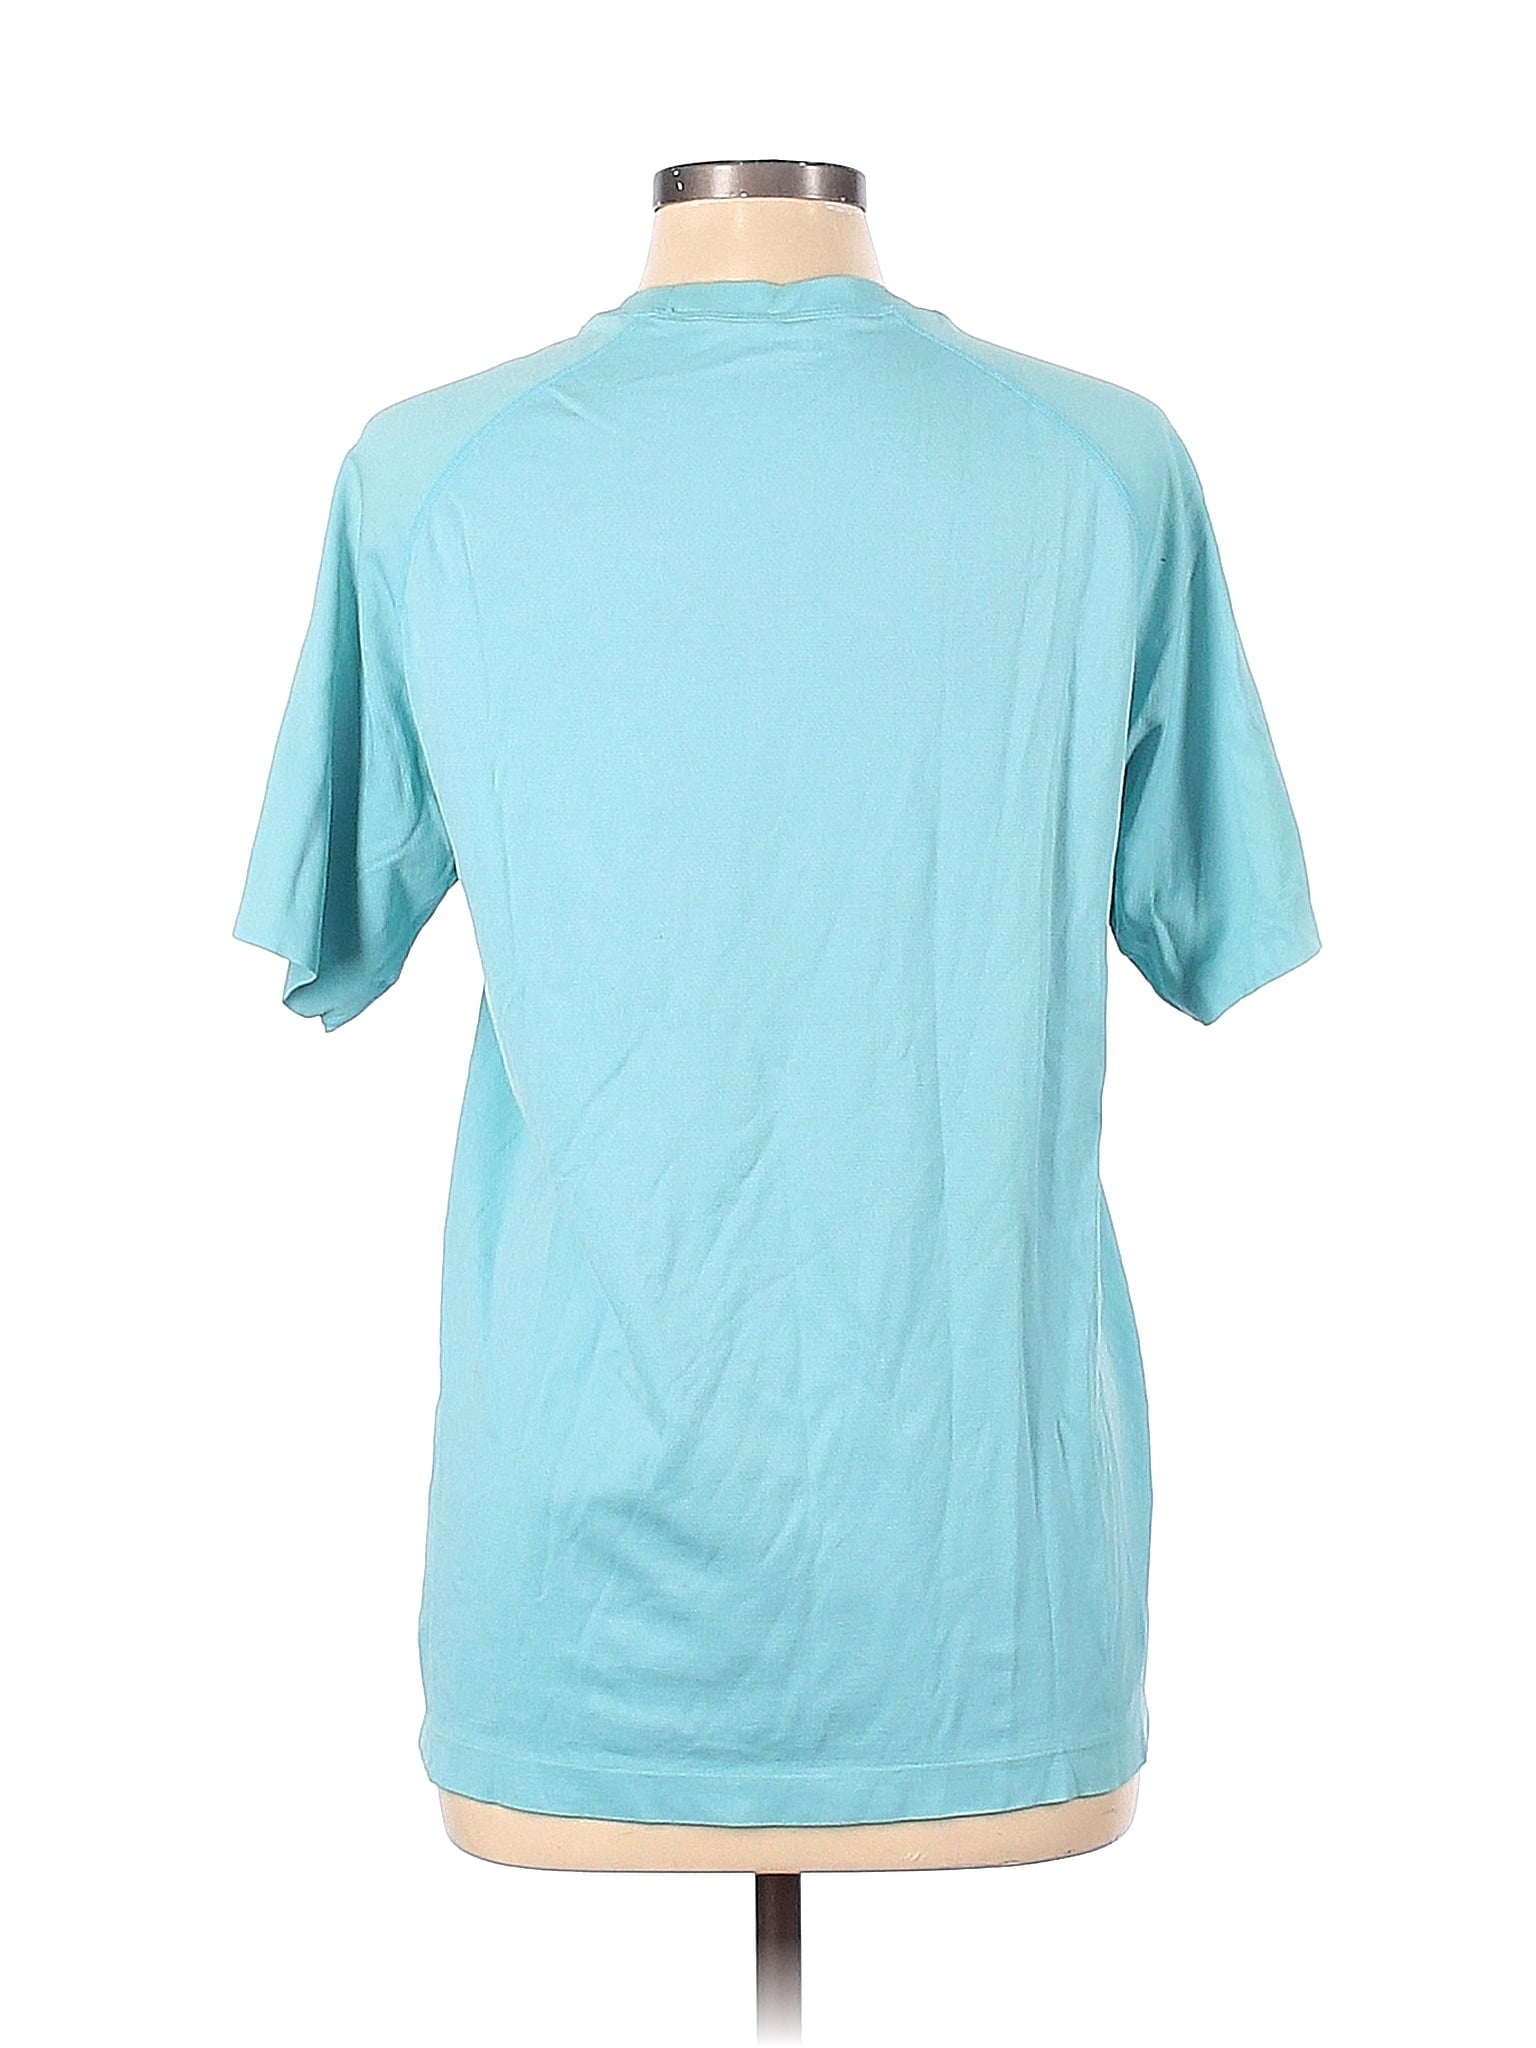 Short Sleeve T Shirt size - L